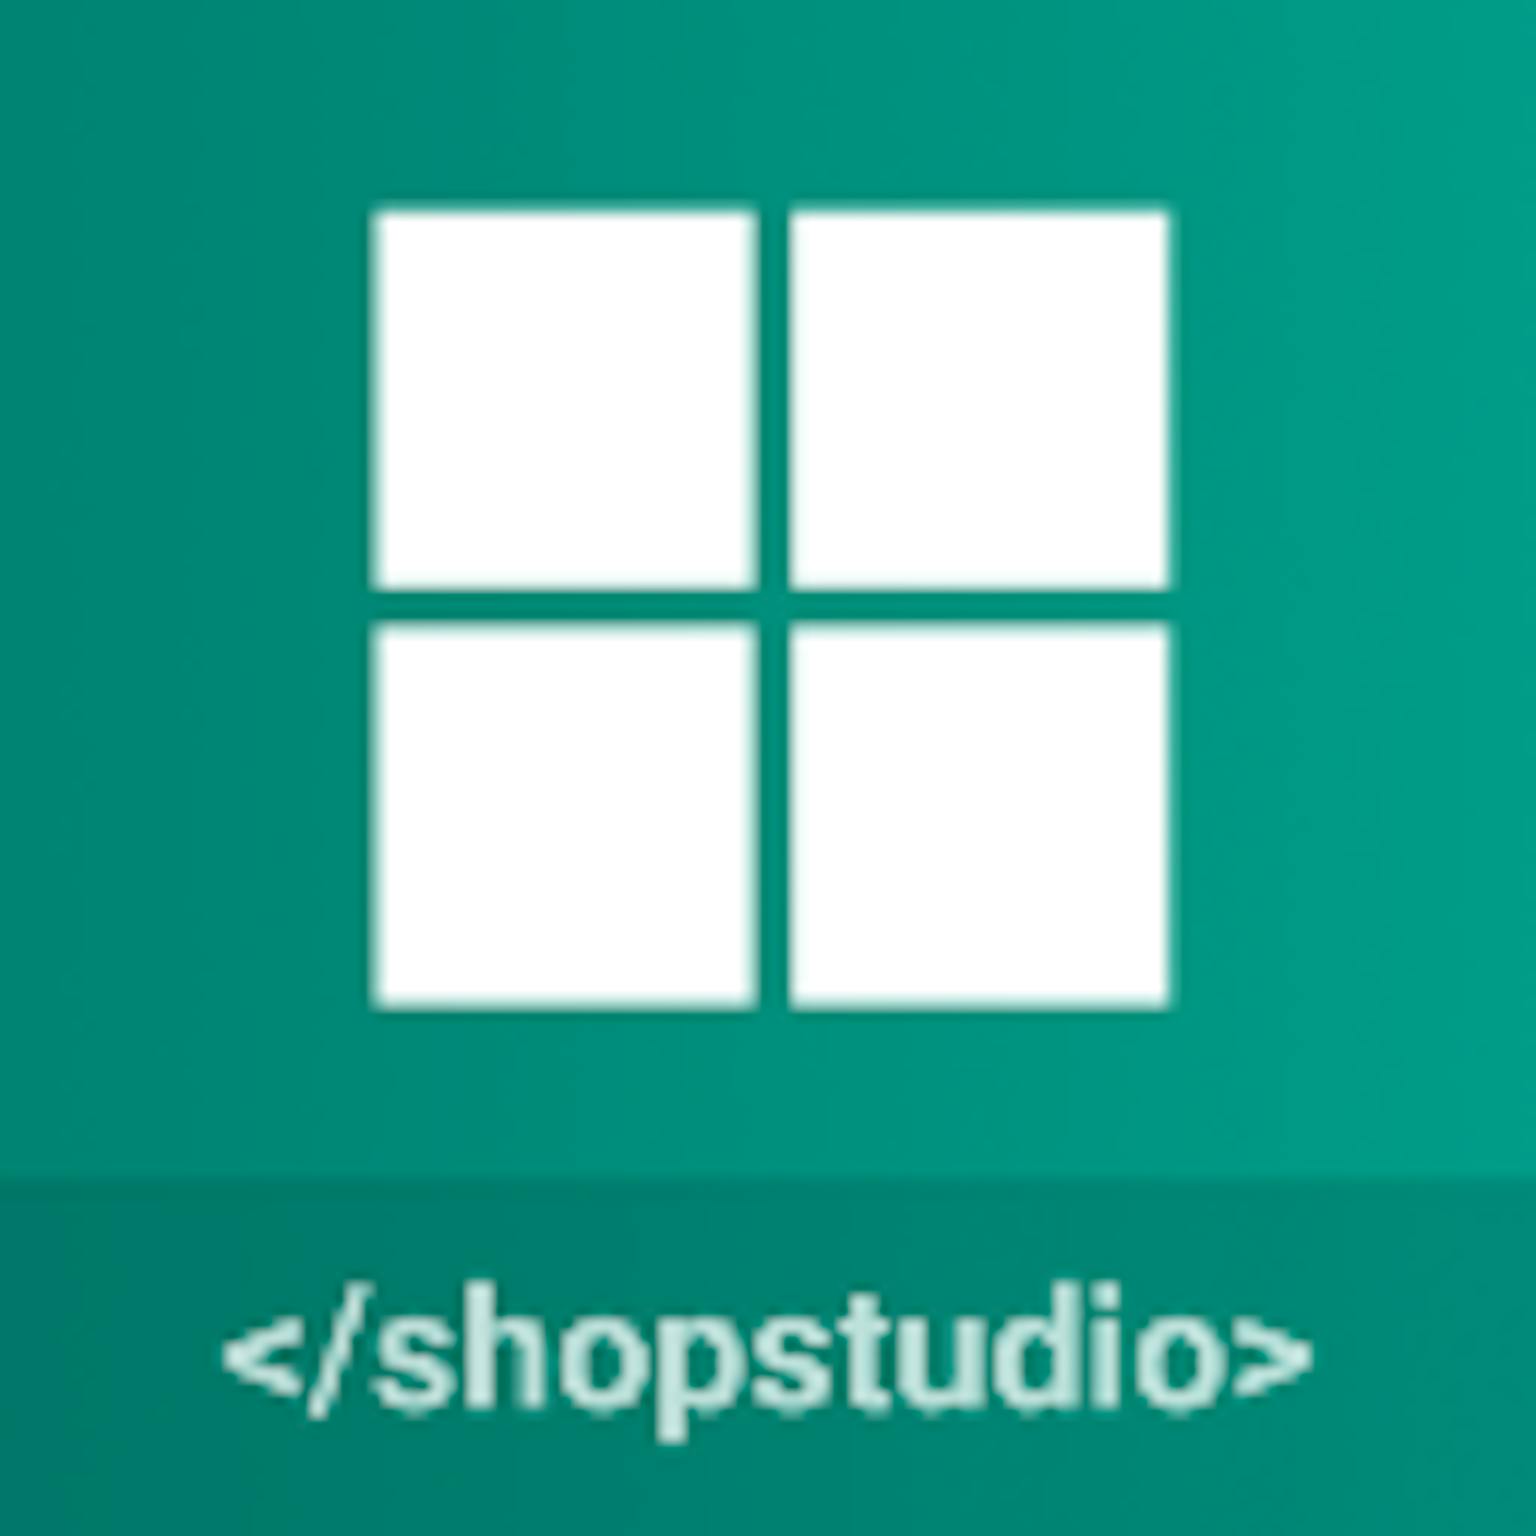 Shopware extension icon: Microsoft Advertising`